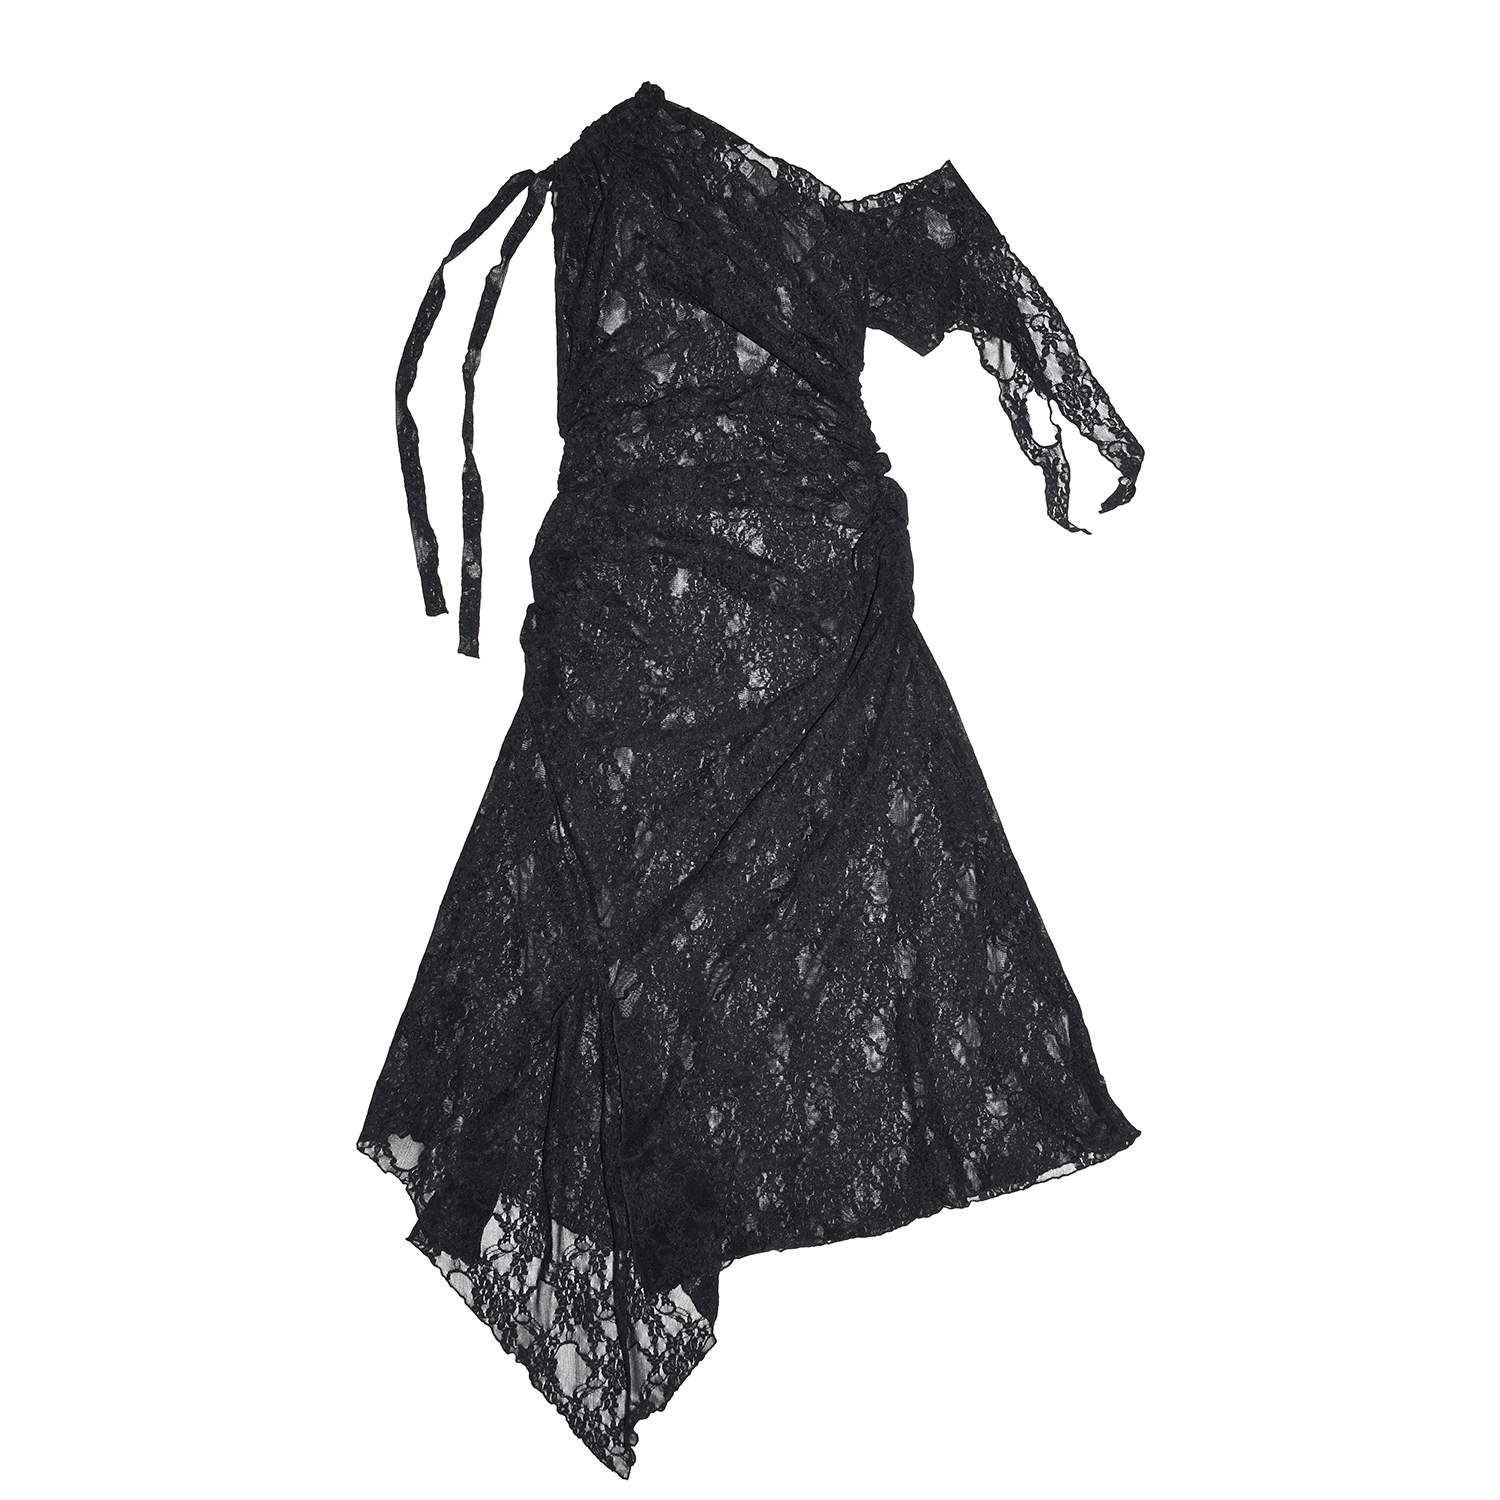 OATS - Summer Dress - Black Lace